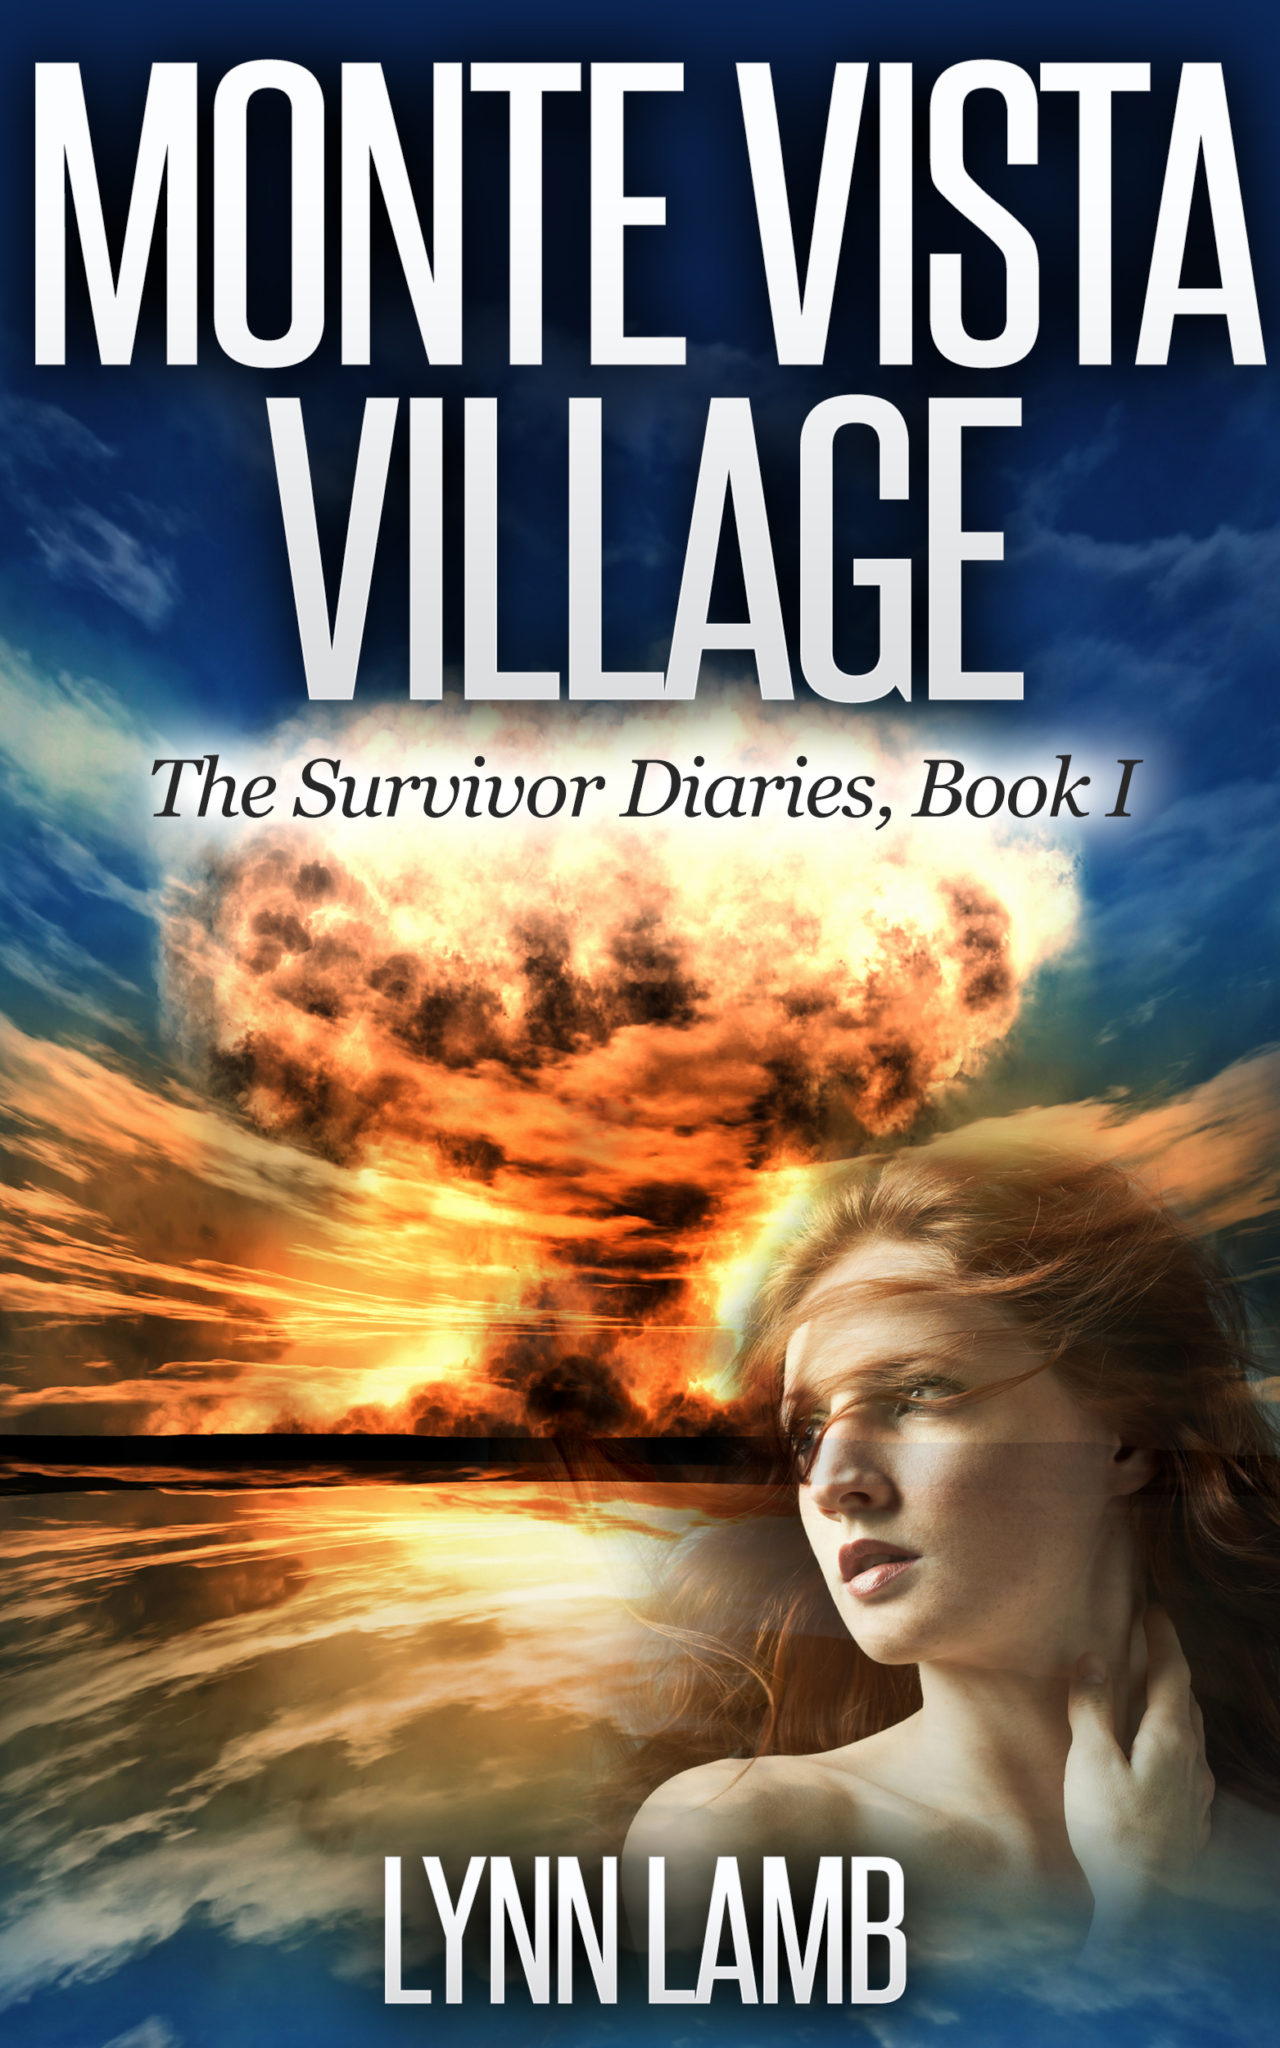 FREE: Monte Vista Village,  Survivor Diaries- Book I by Lynn Lamb